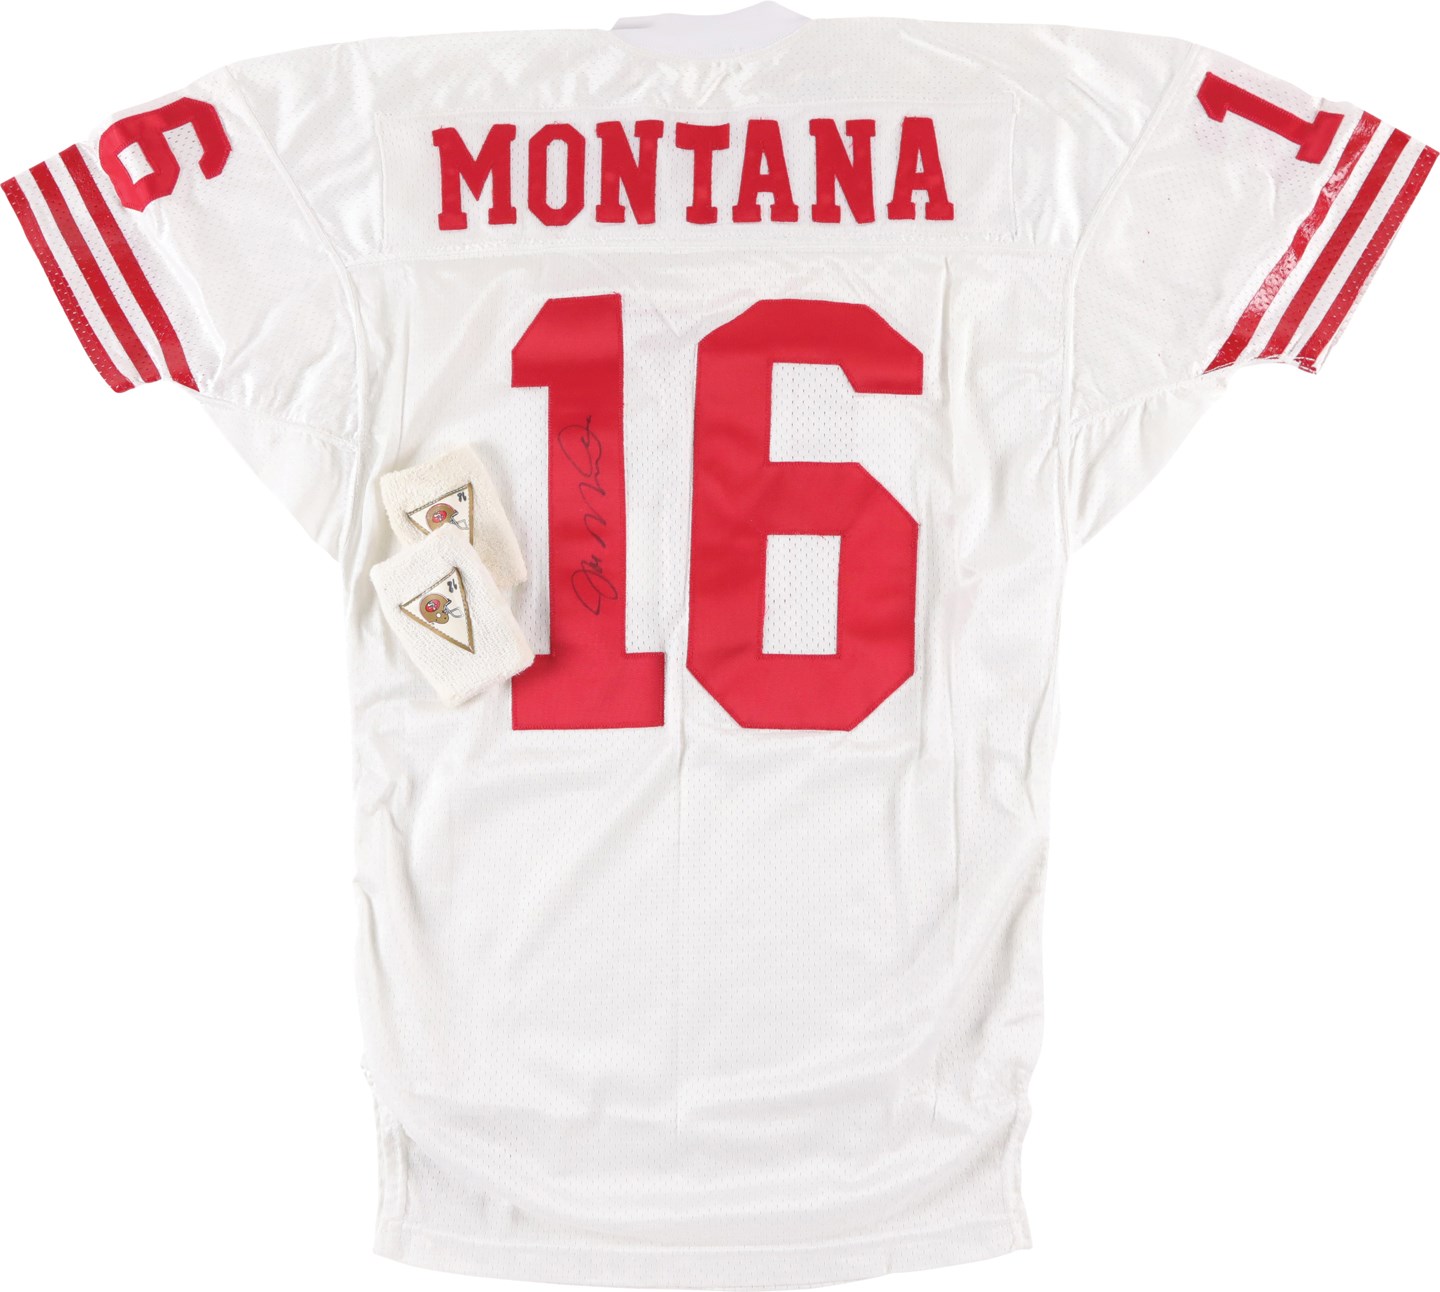 - Circa 1990 Joe Montana San Francisco 49ers Signed Game Jersey w/Provenance (Teammate LOA)